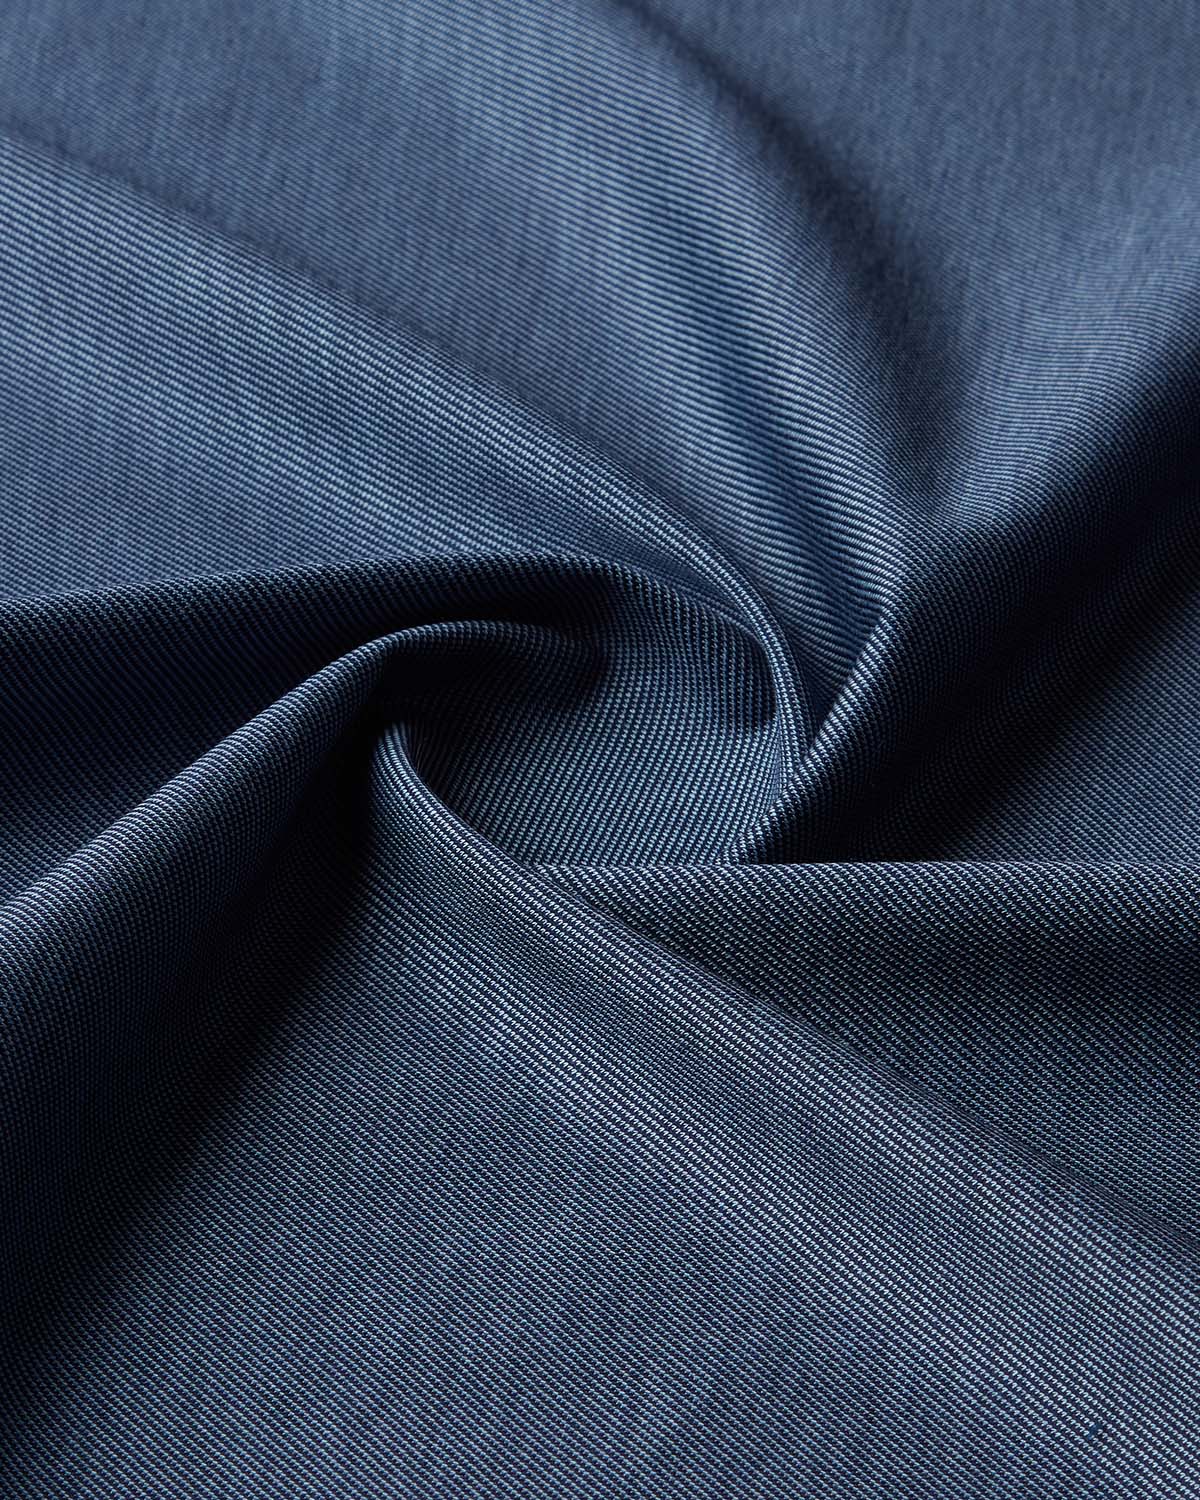 Bombay Shirt Company - Lazulite Knit Shirt